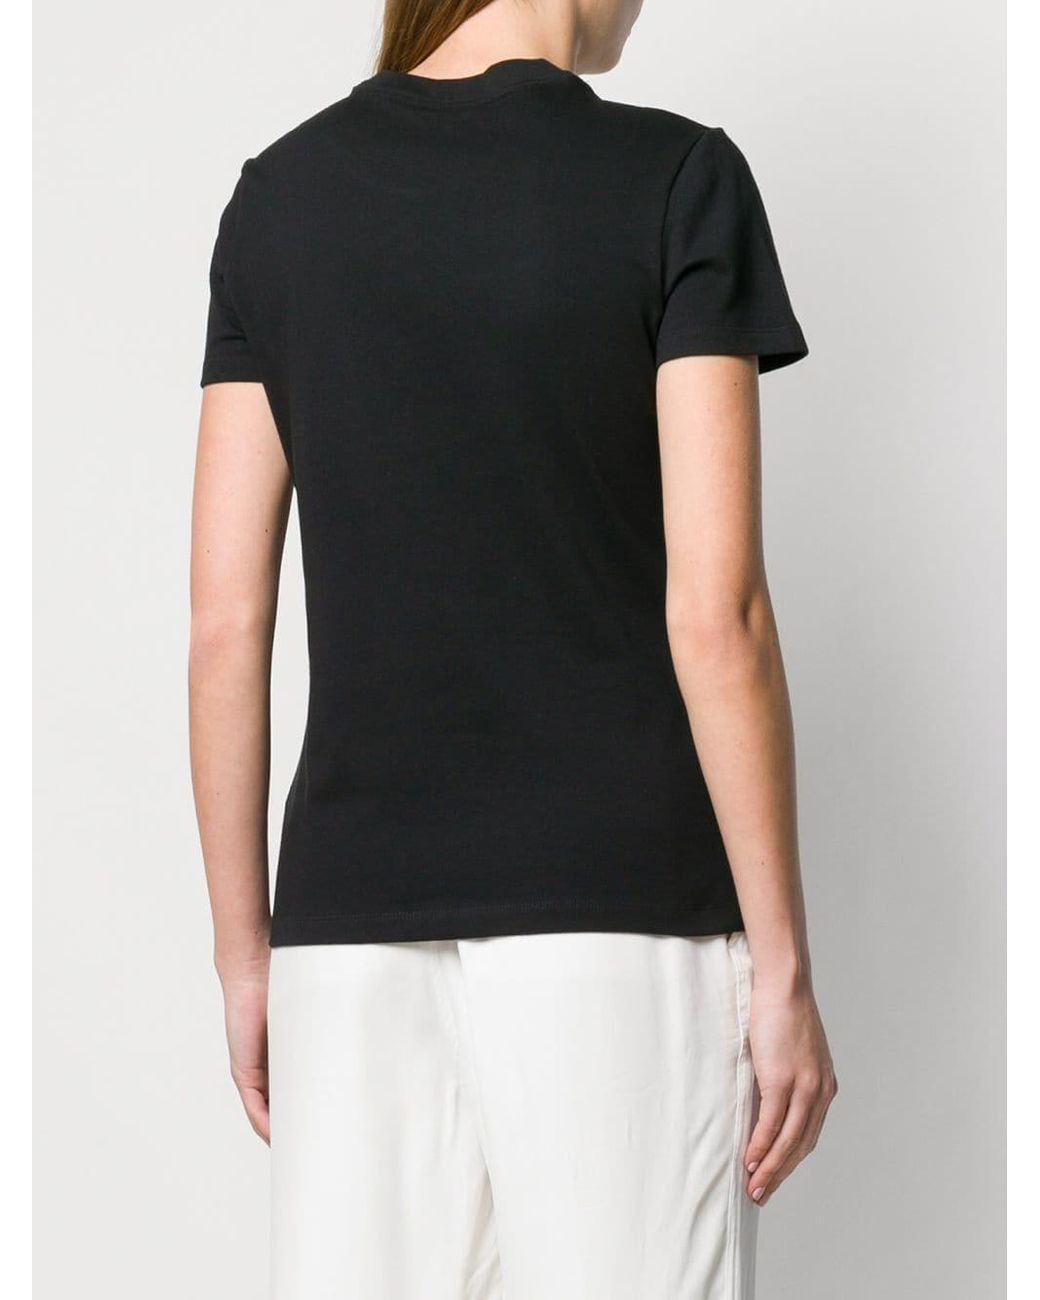 Nike Cotton Leopard Print Logo T-shirt in Black | Lyst Australia